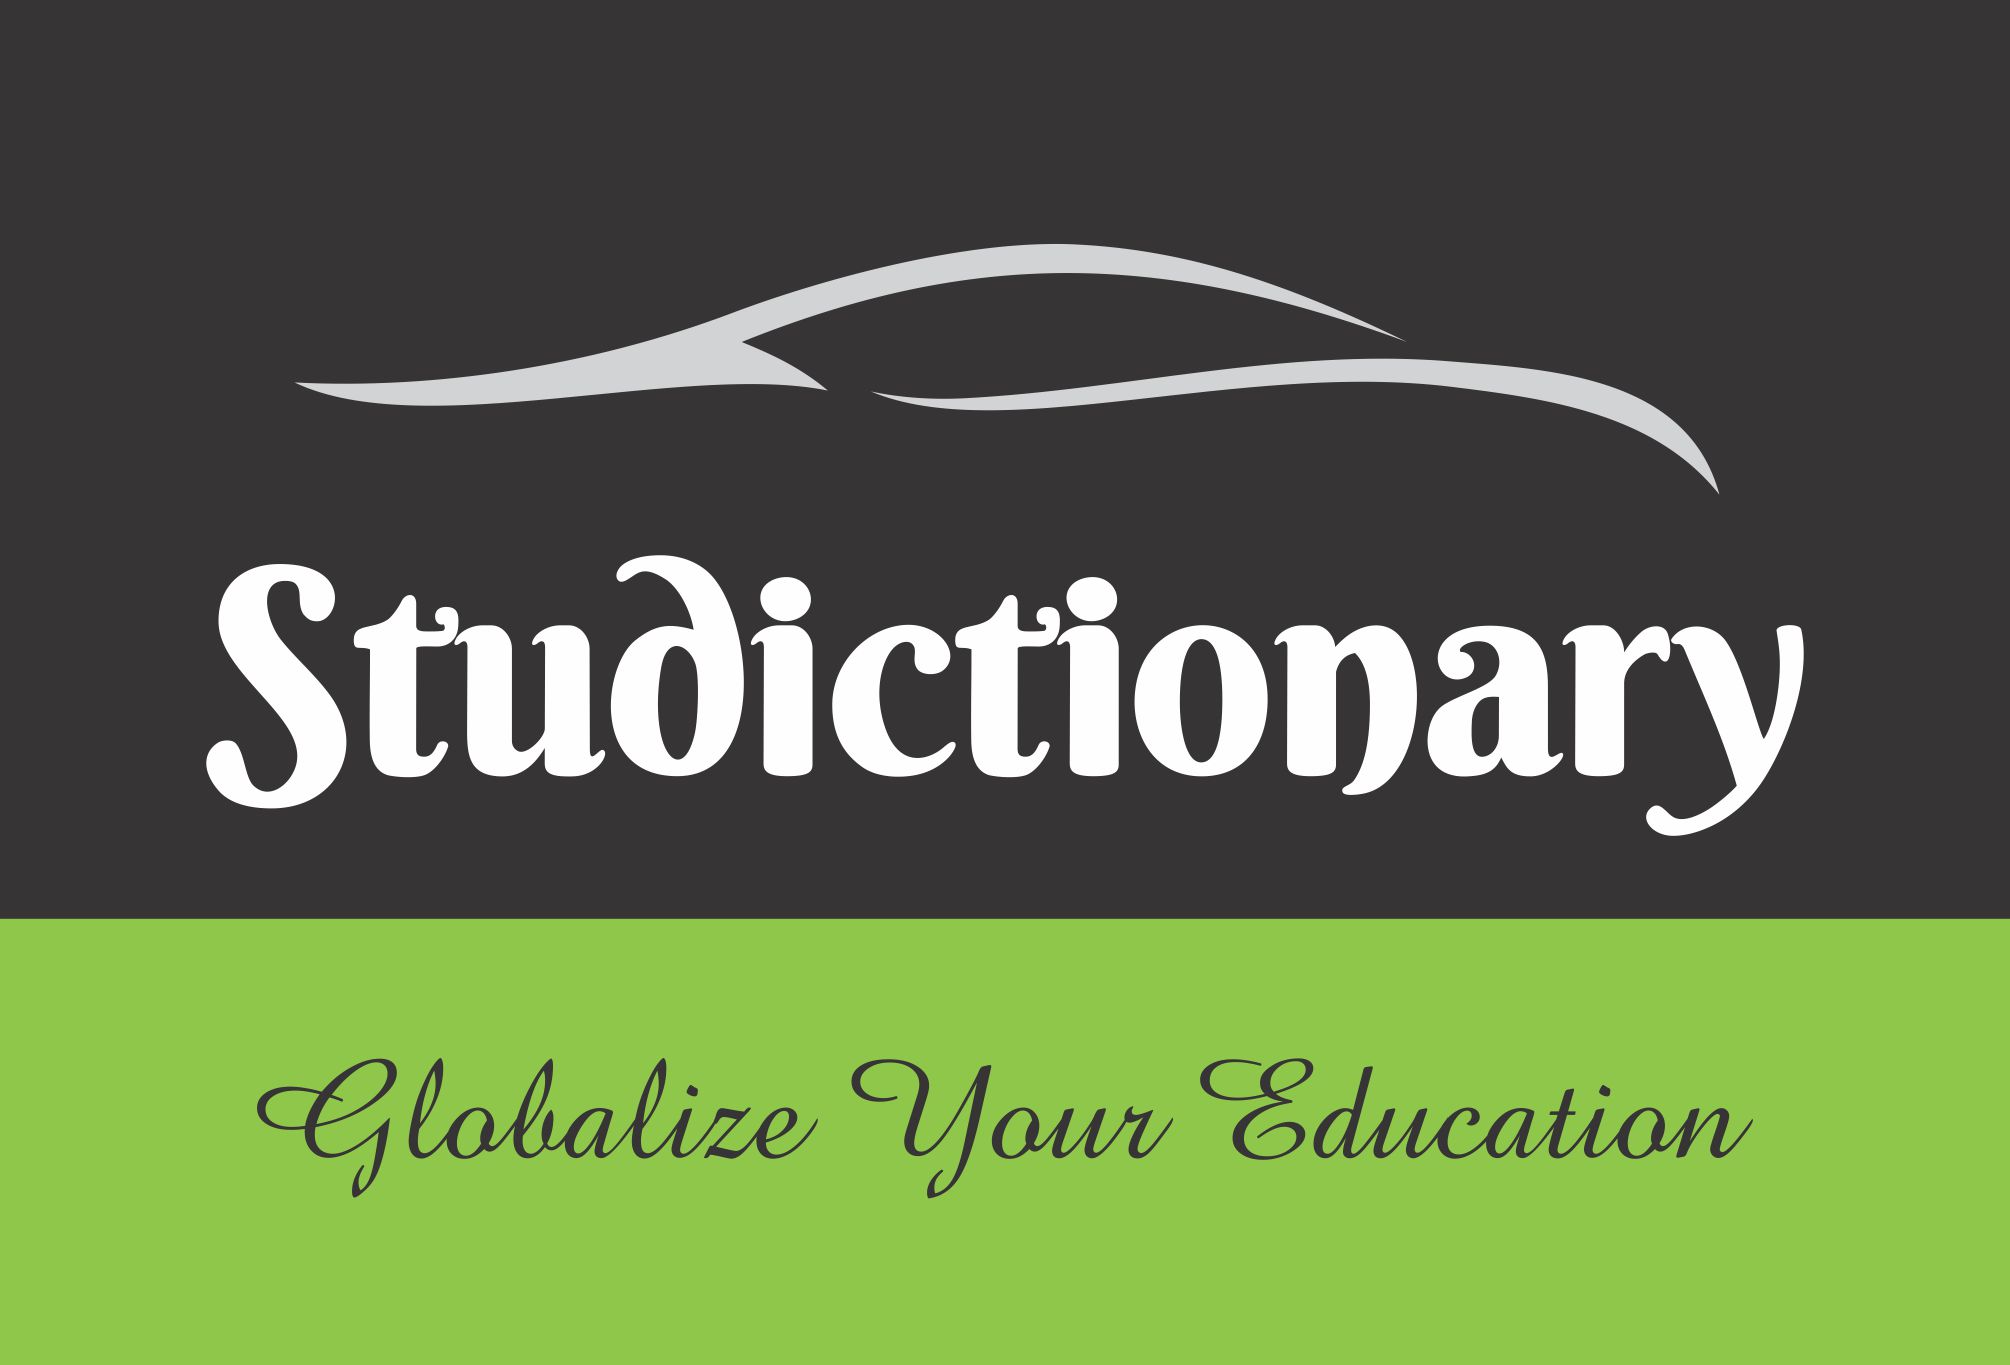 studictionary logo